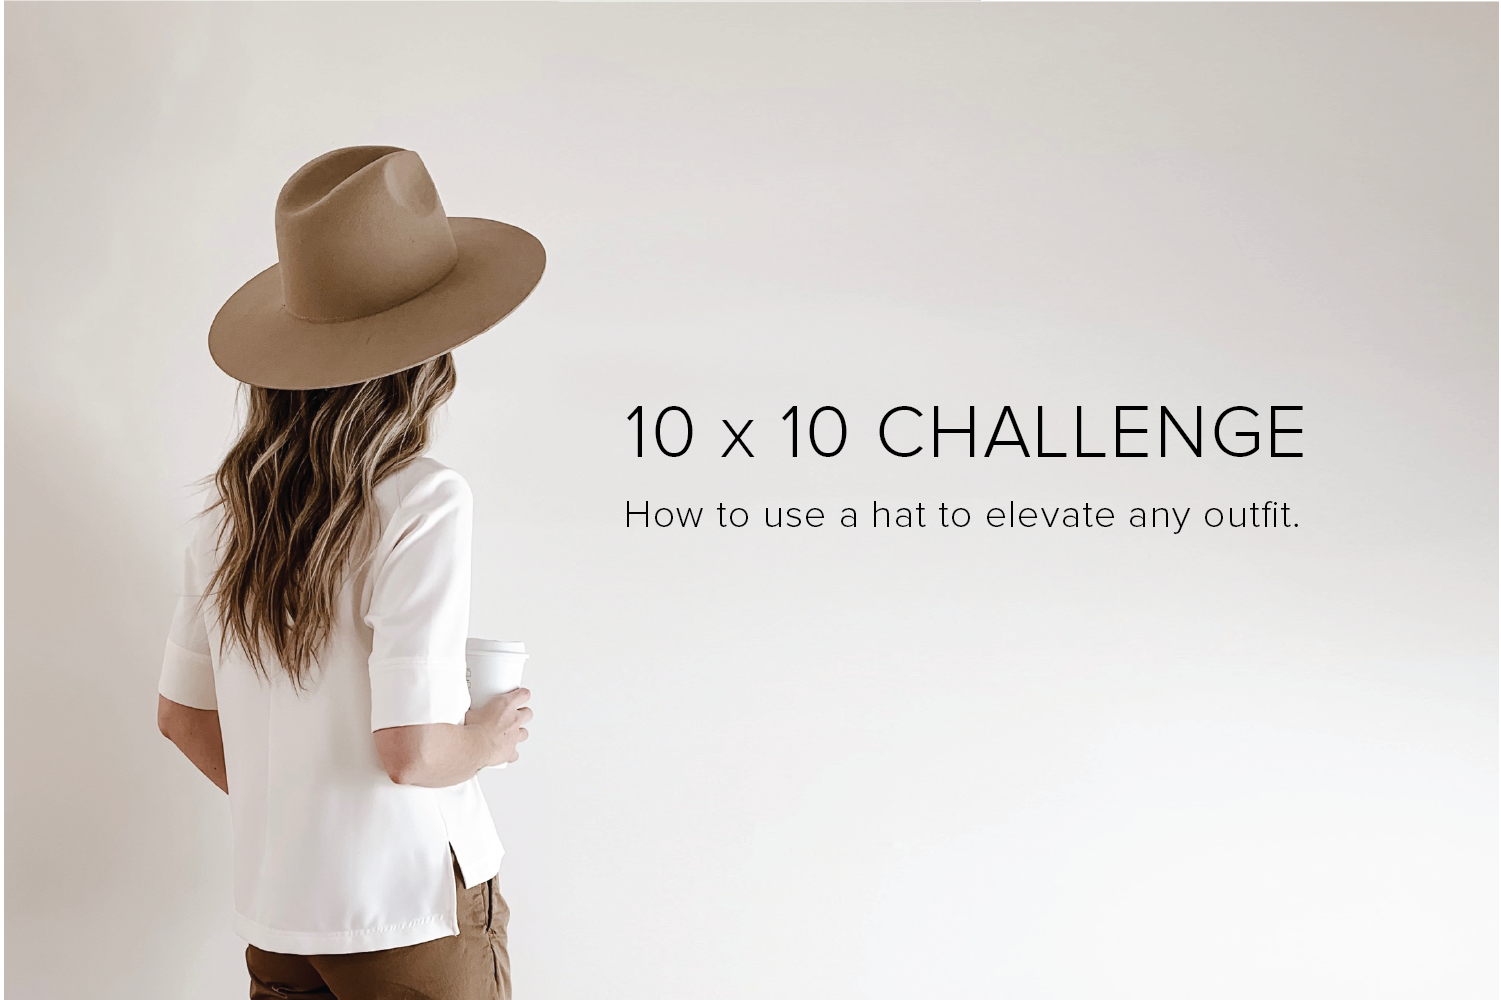 10x10 challenge header image